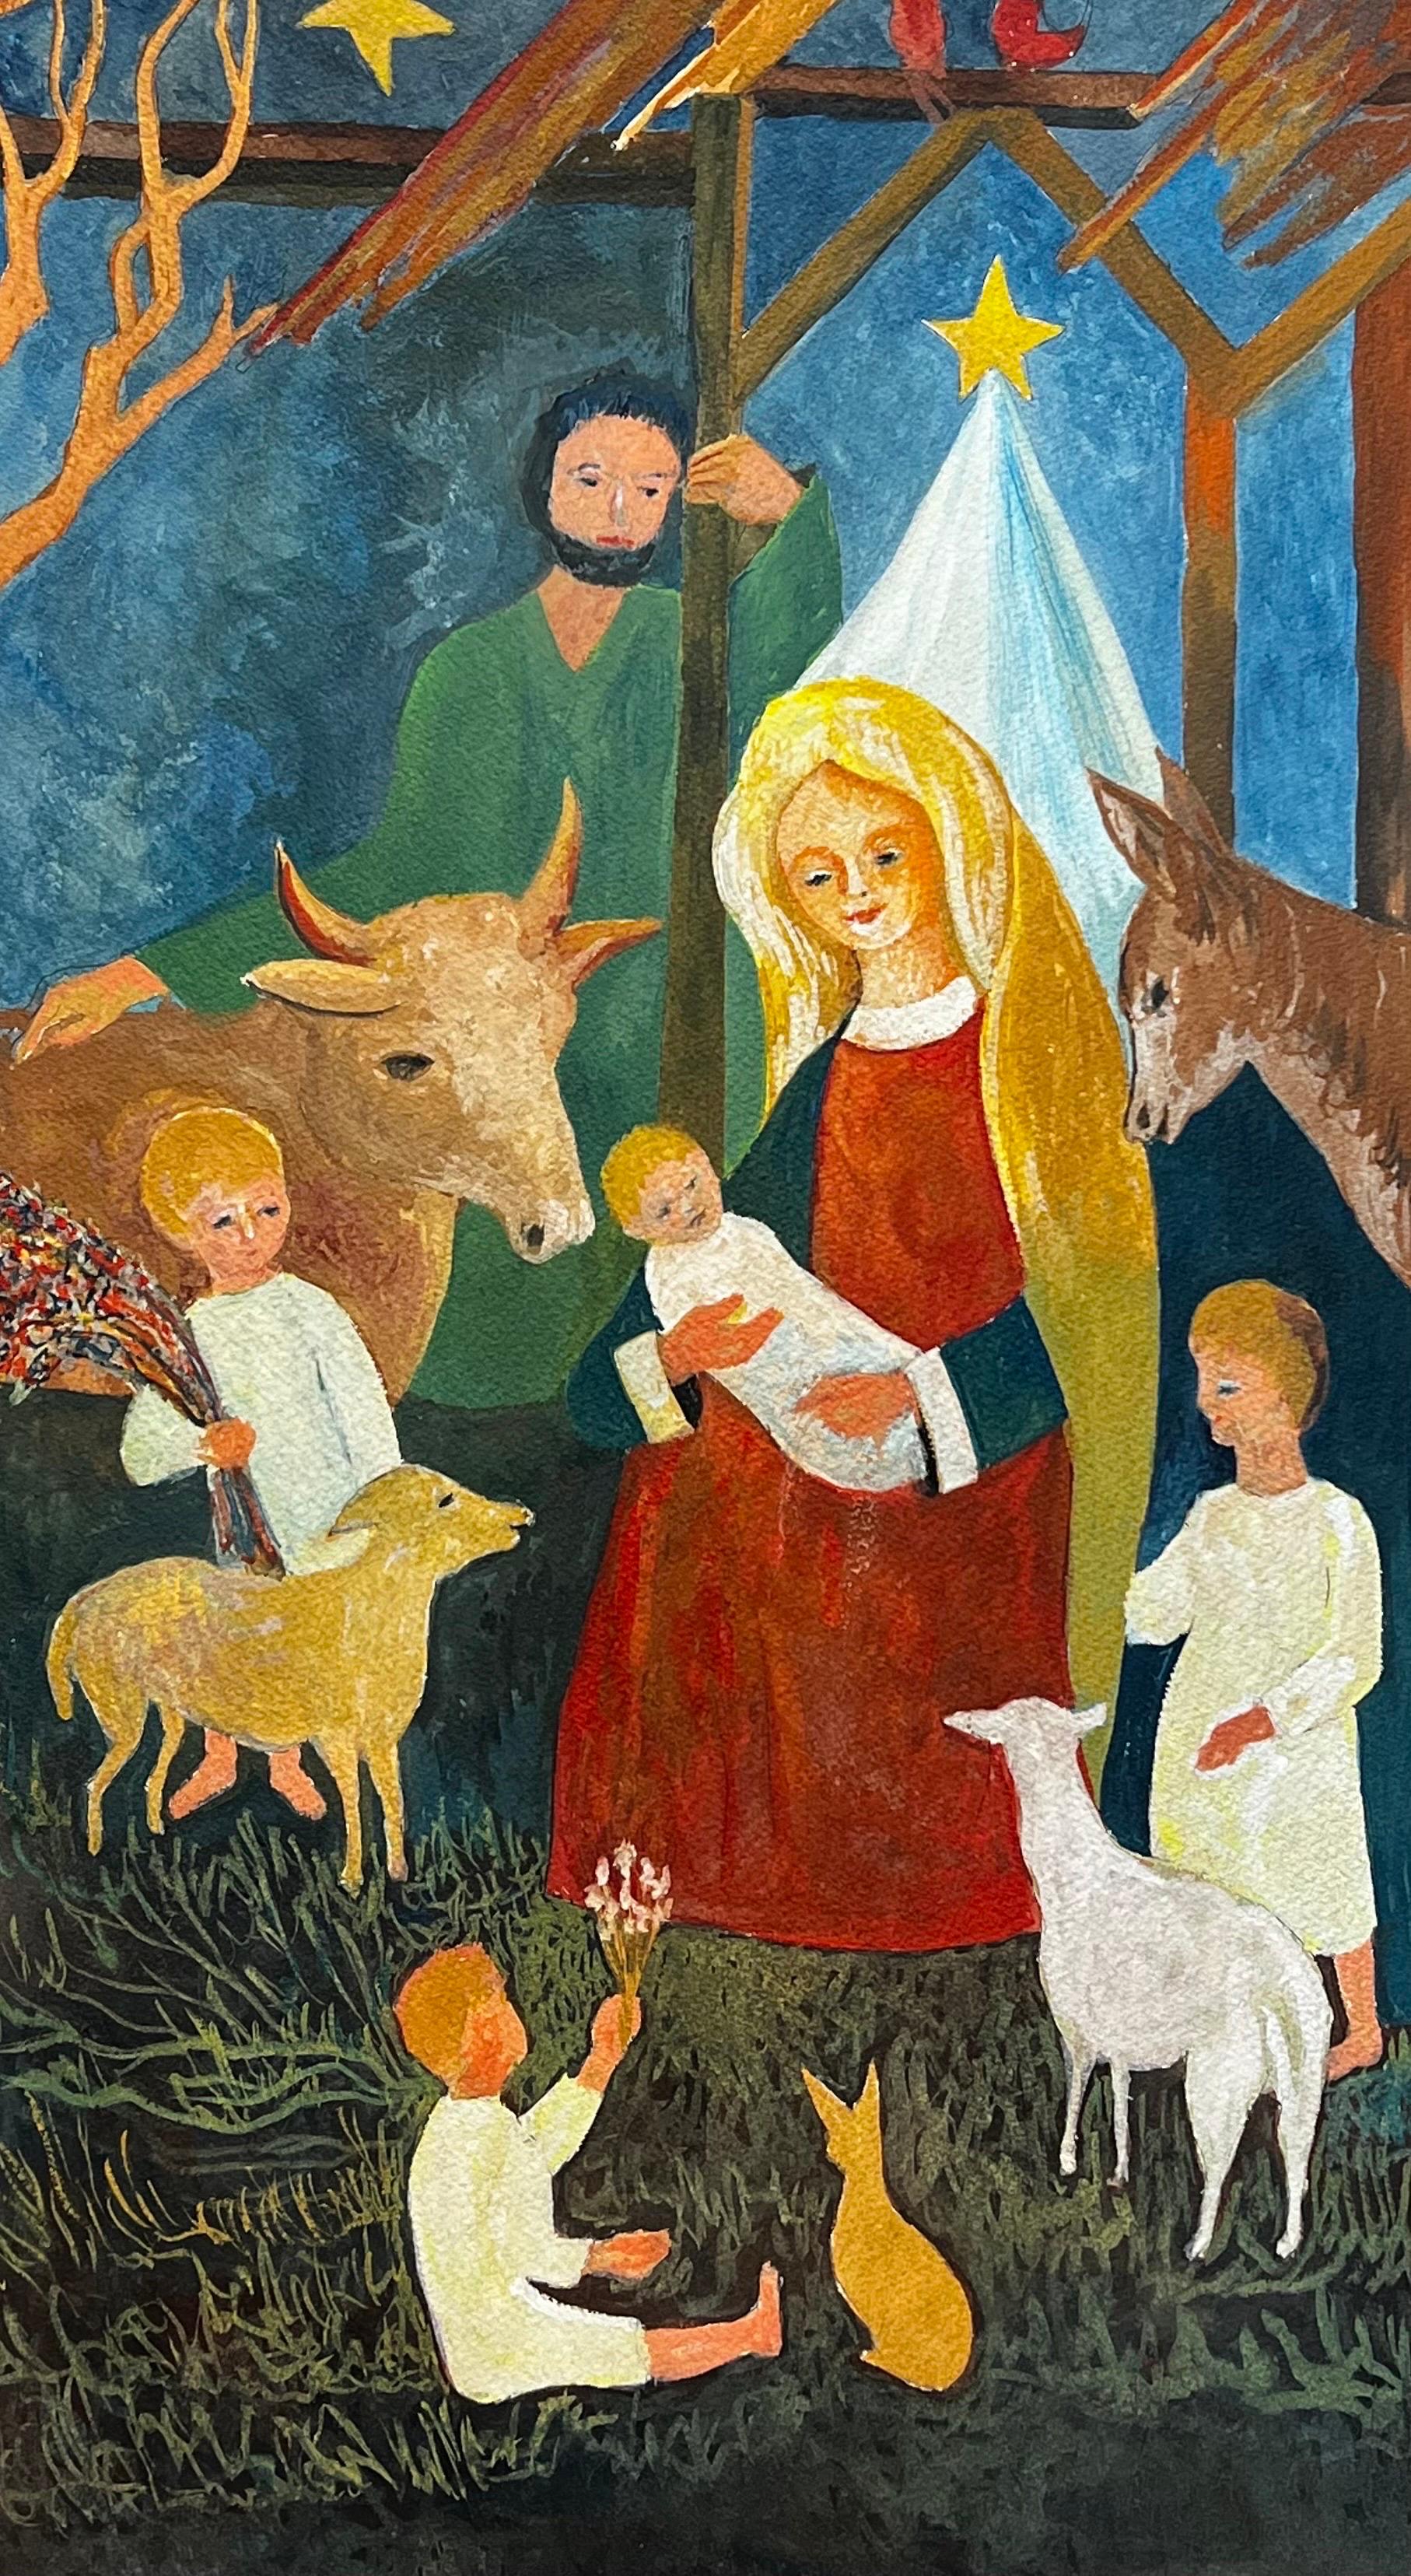 Bernard Labbe Figurative Art - 1950's Modernist/ Cubist Painting - Nativity Scene